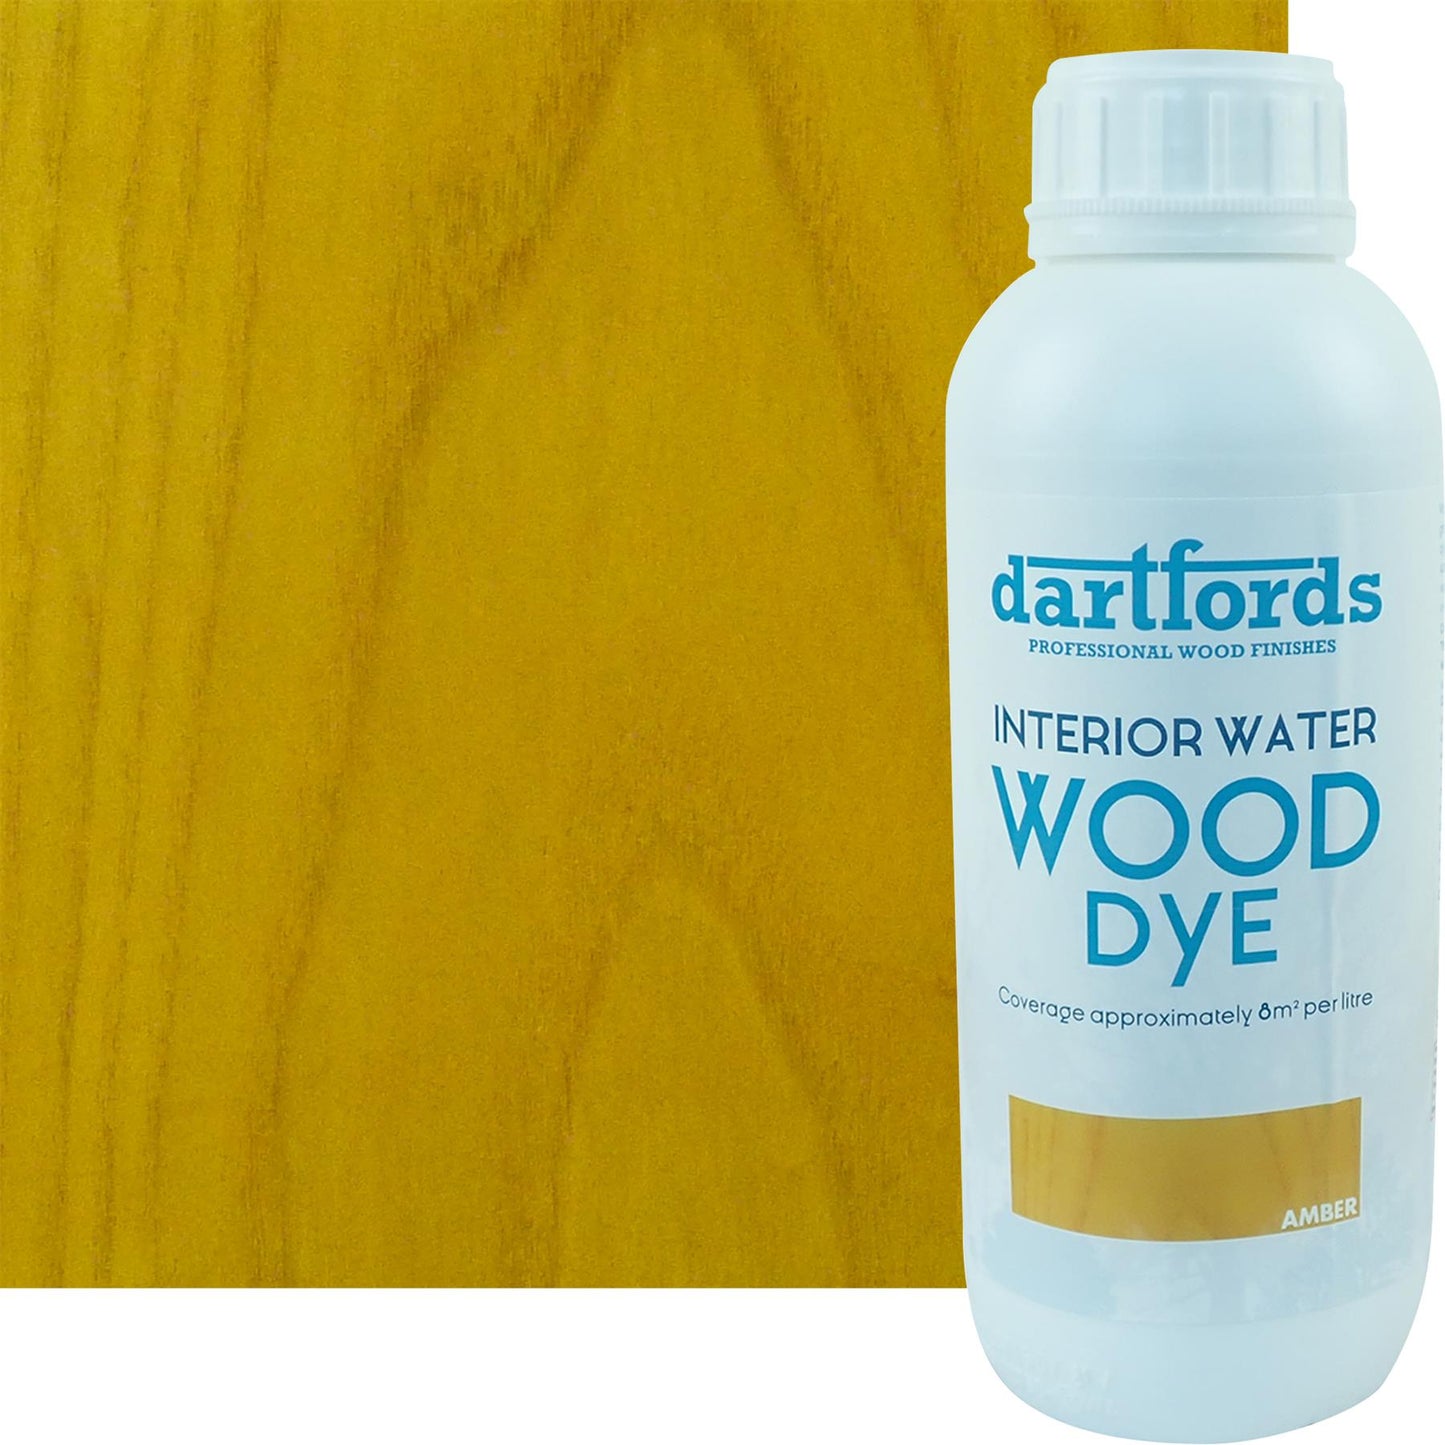 dartfords Amber Interior Water Based Wood Dye - 1 litre Tin